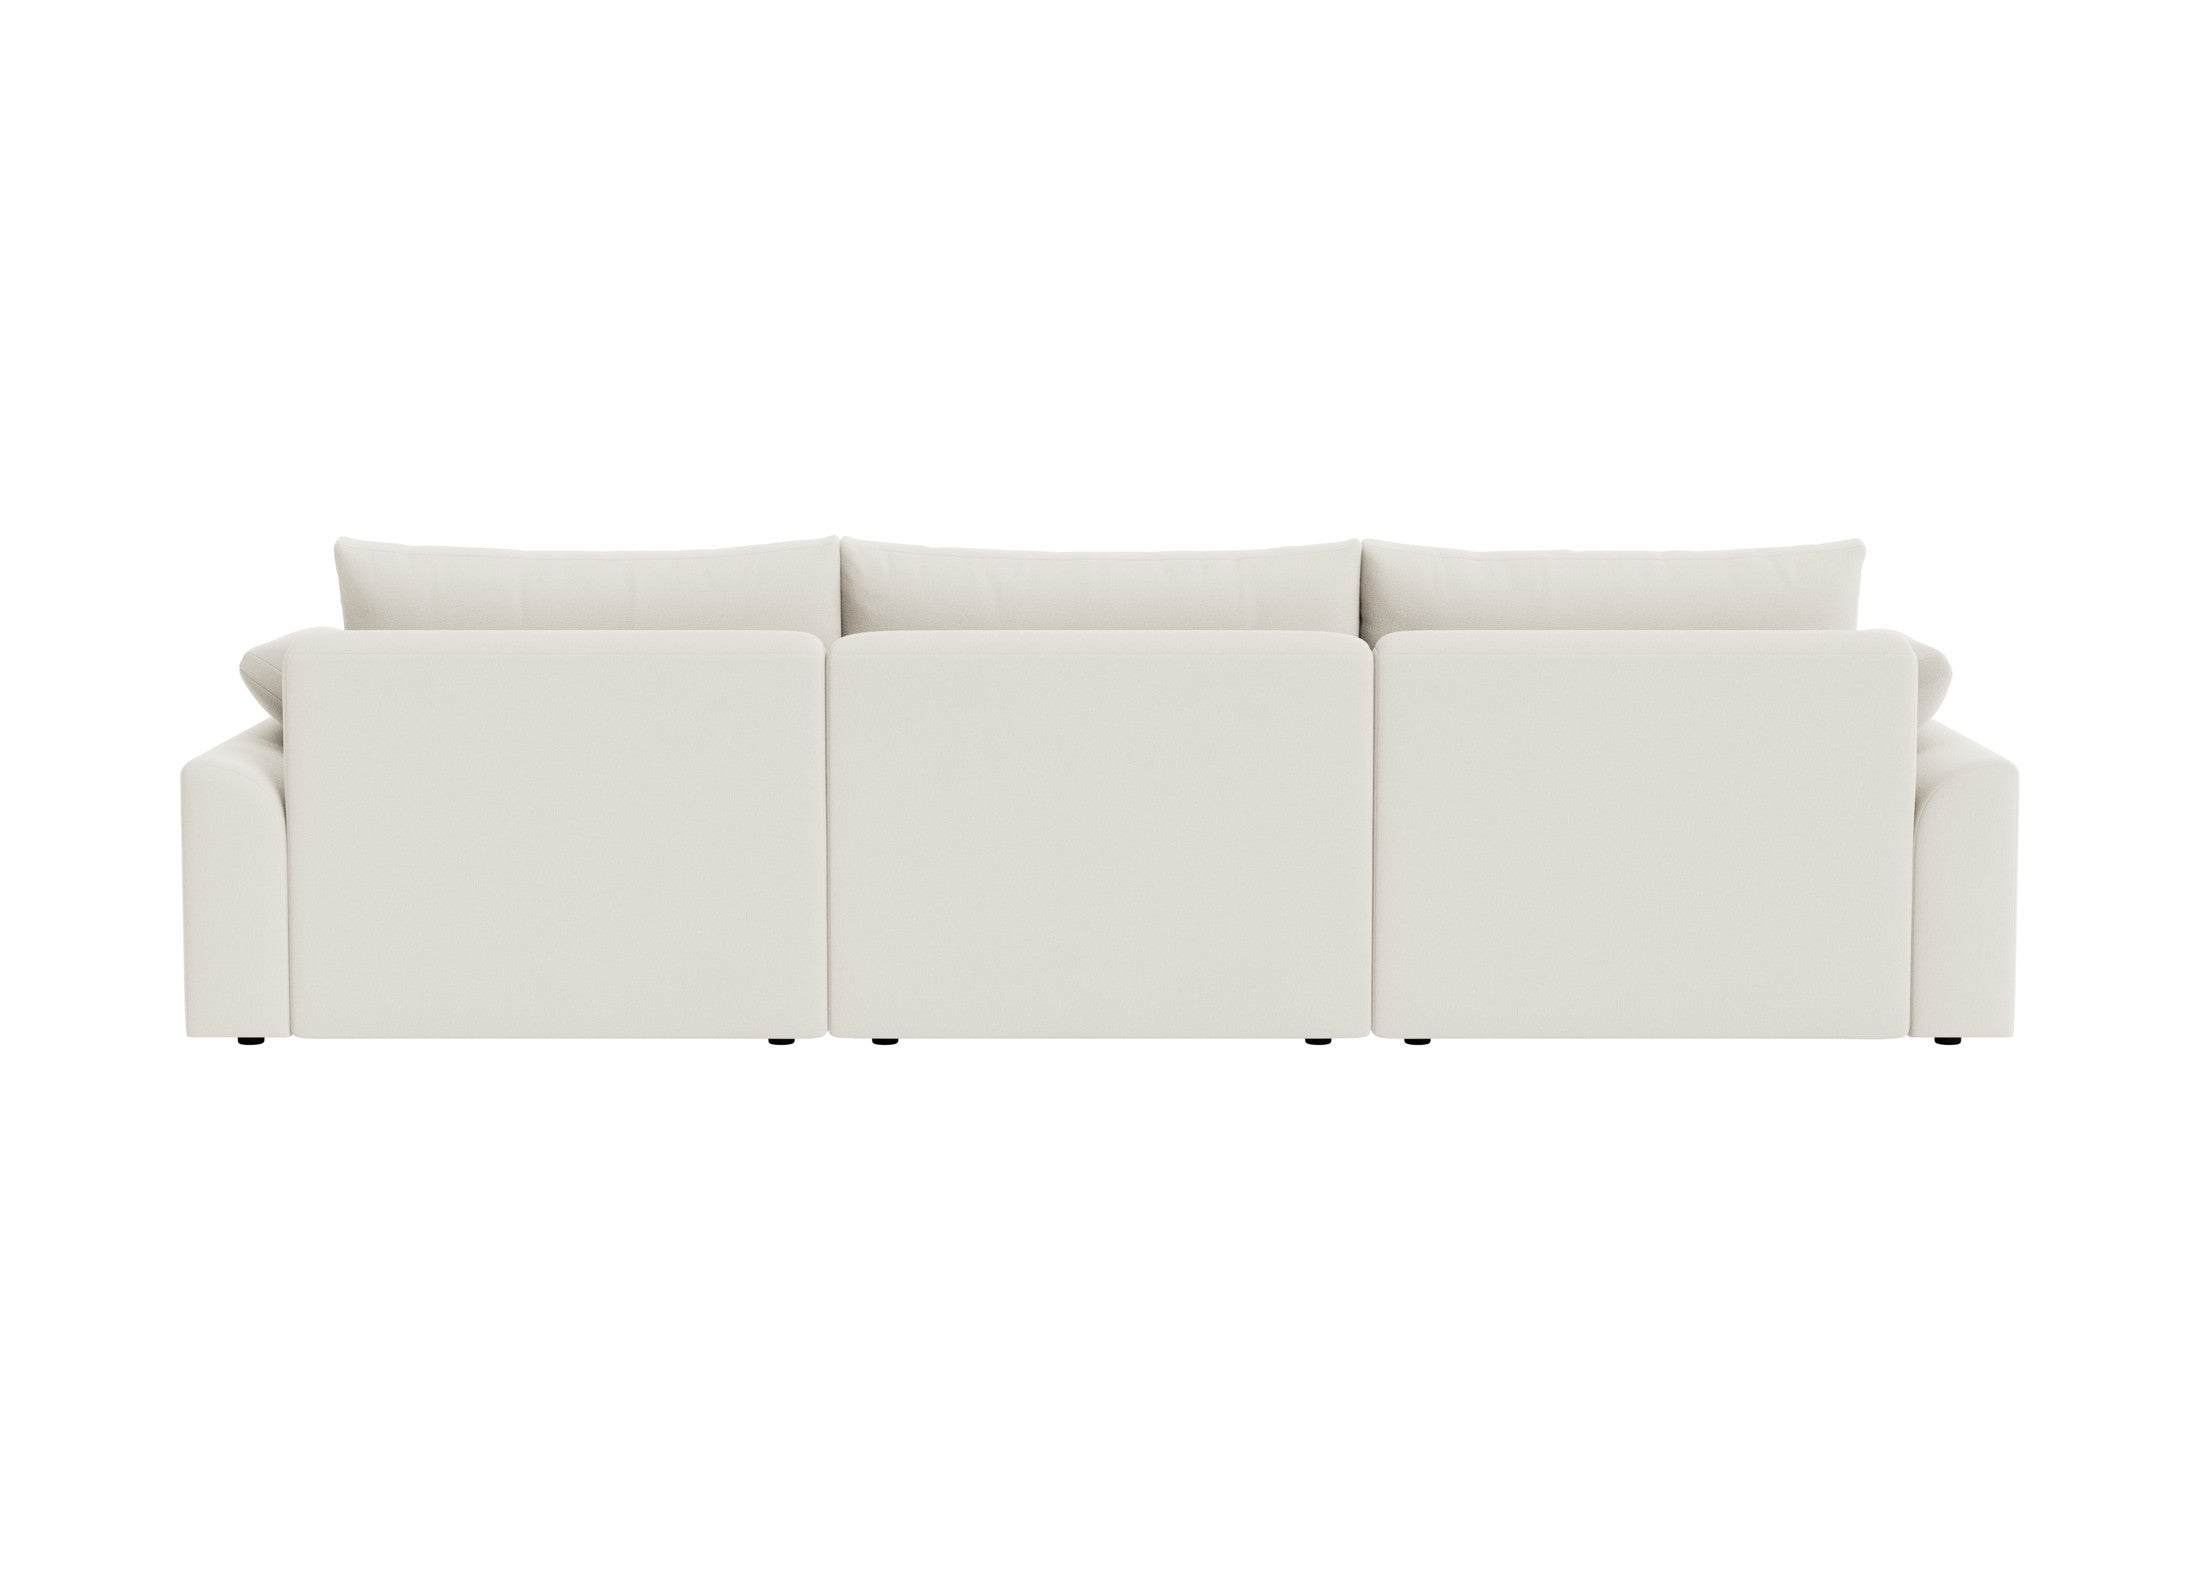 Cuddle Brioche Modular Sofa